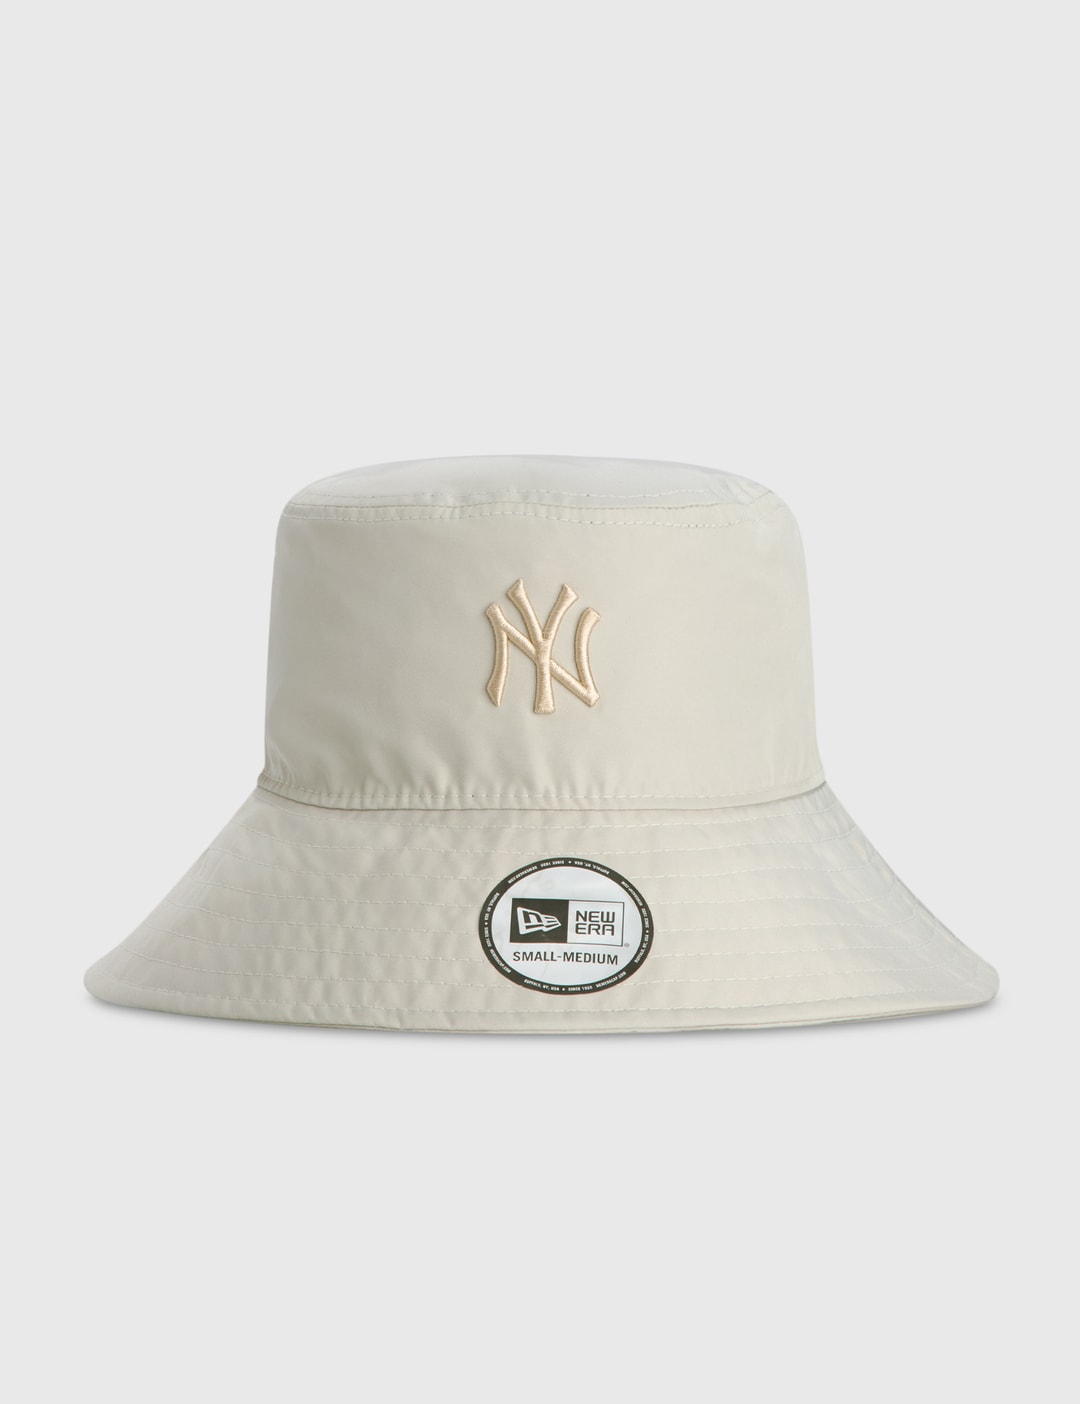 KTZ New York Yankees Womens Mlb Beige Adventure Bucket Hat in